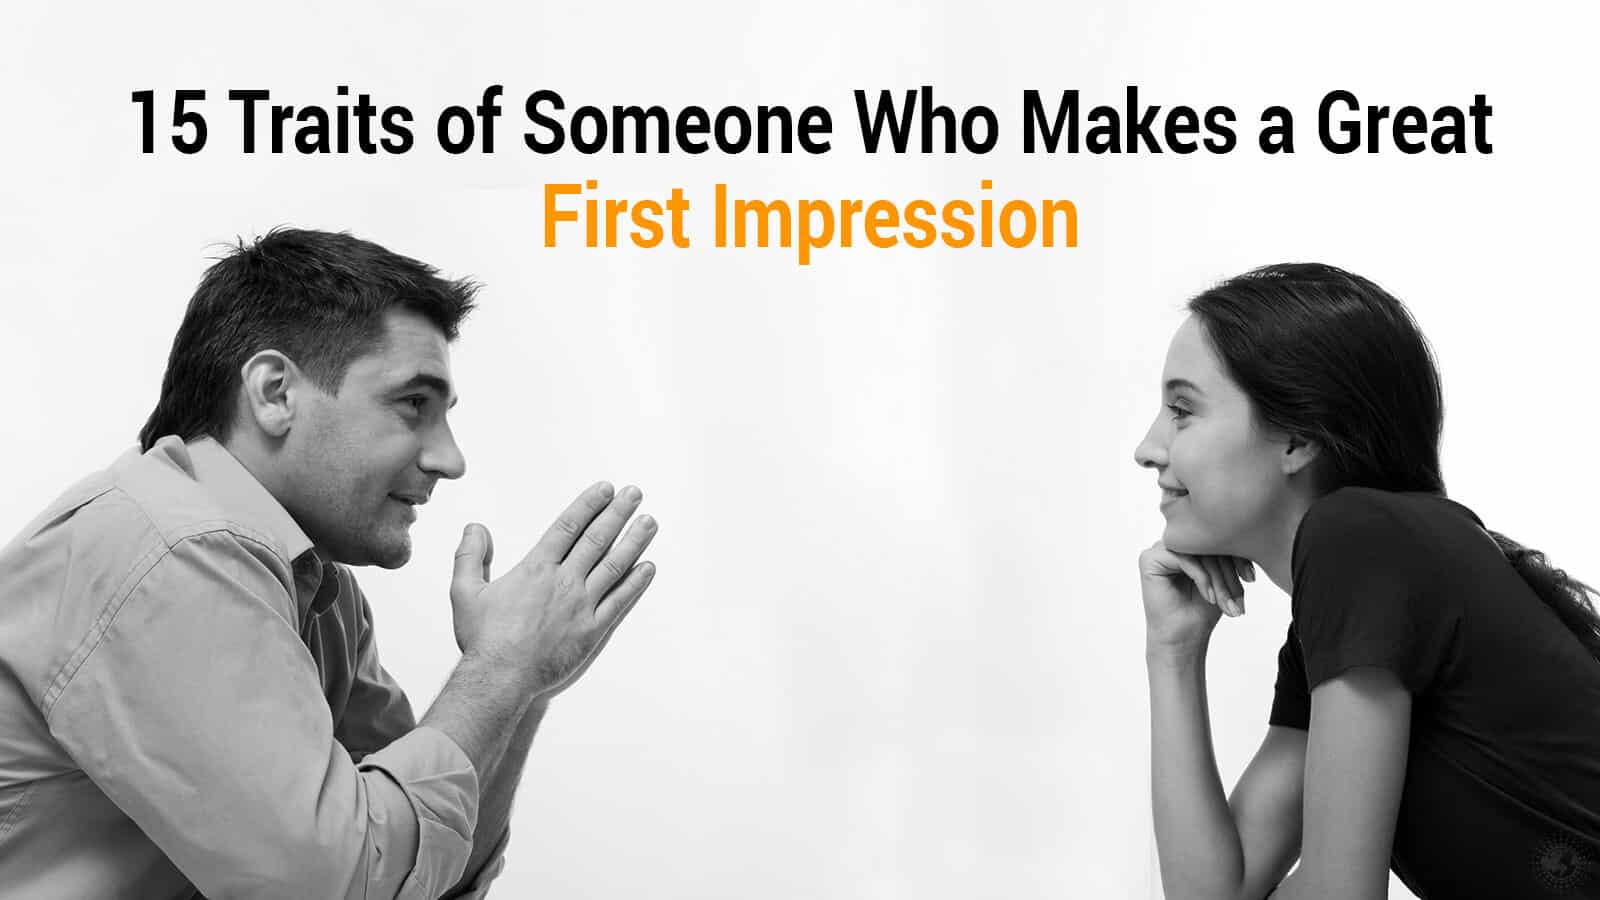 first impression